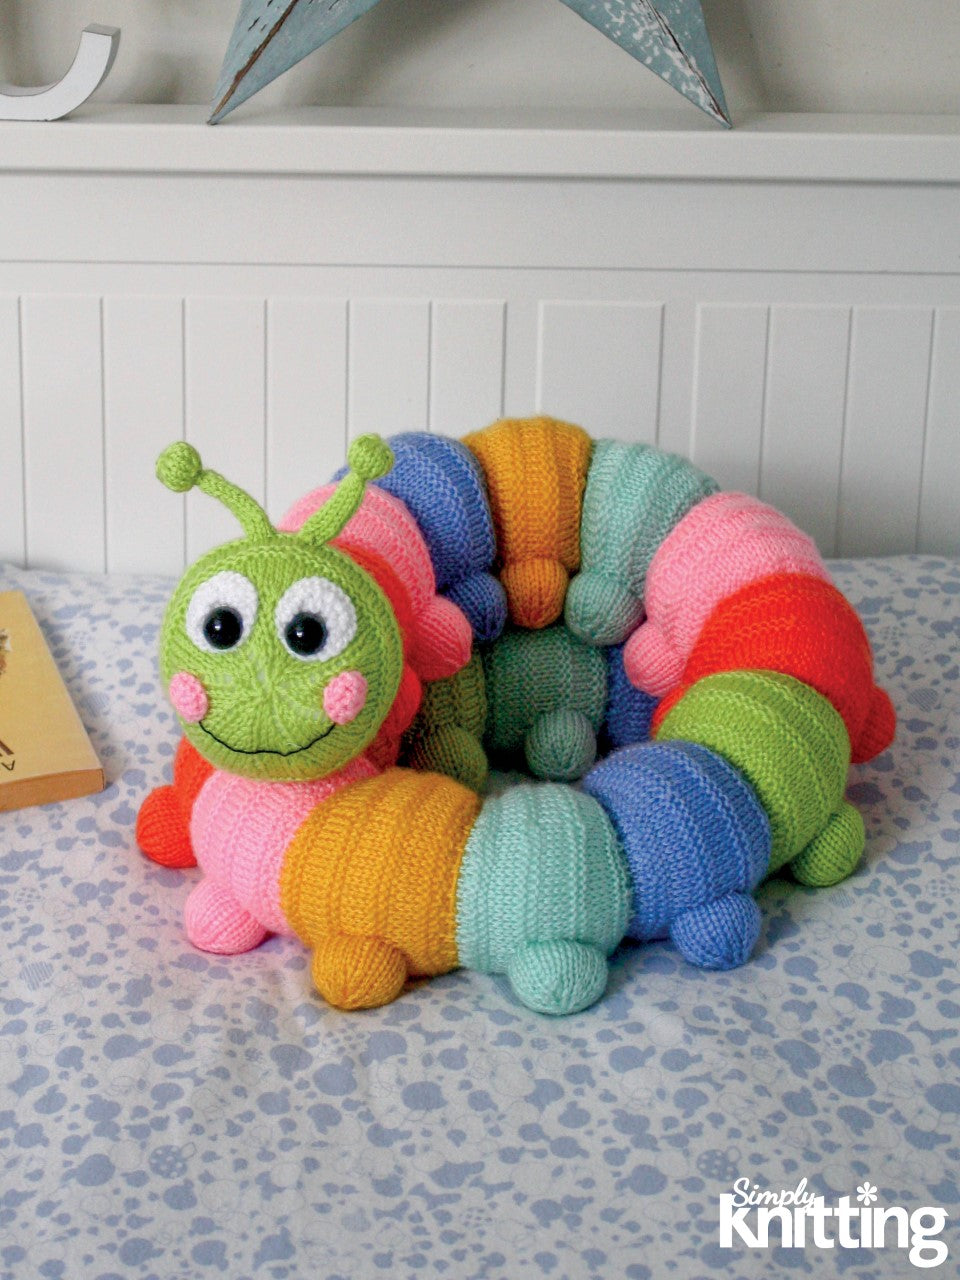 cuddly caterpillar toy